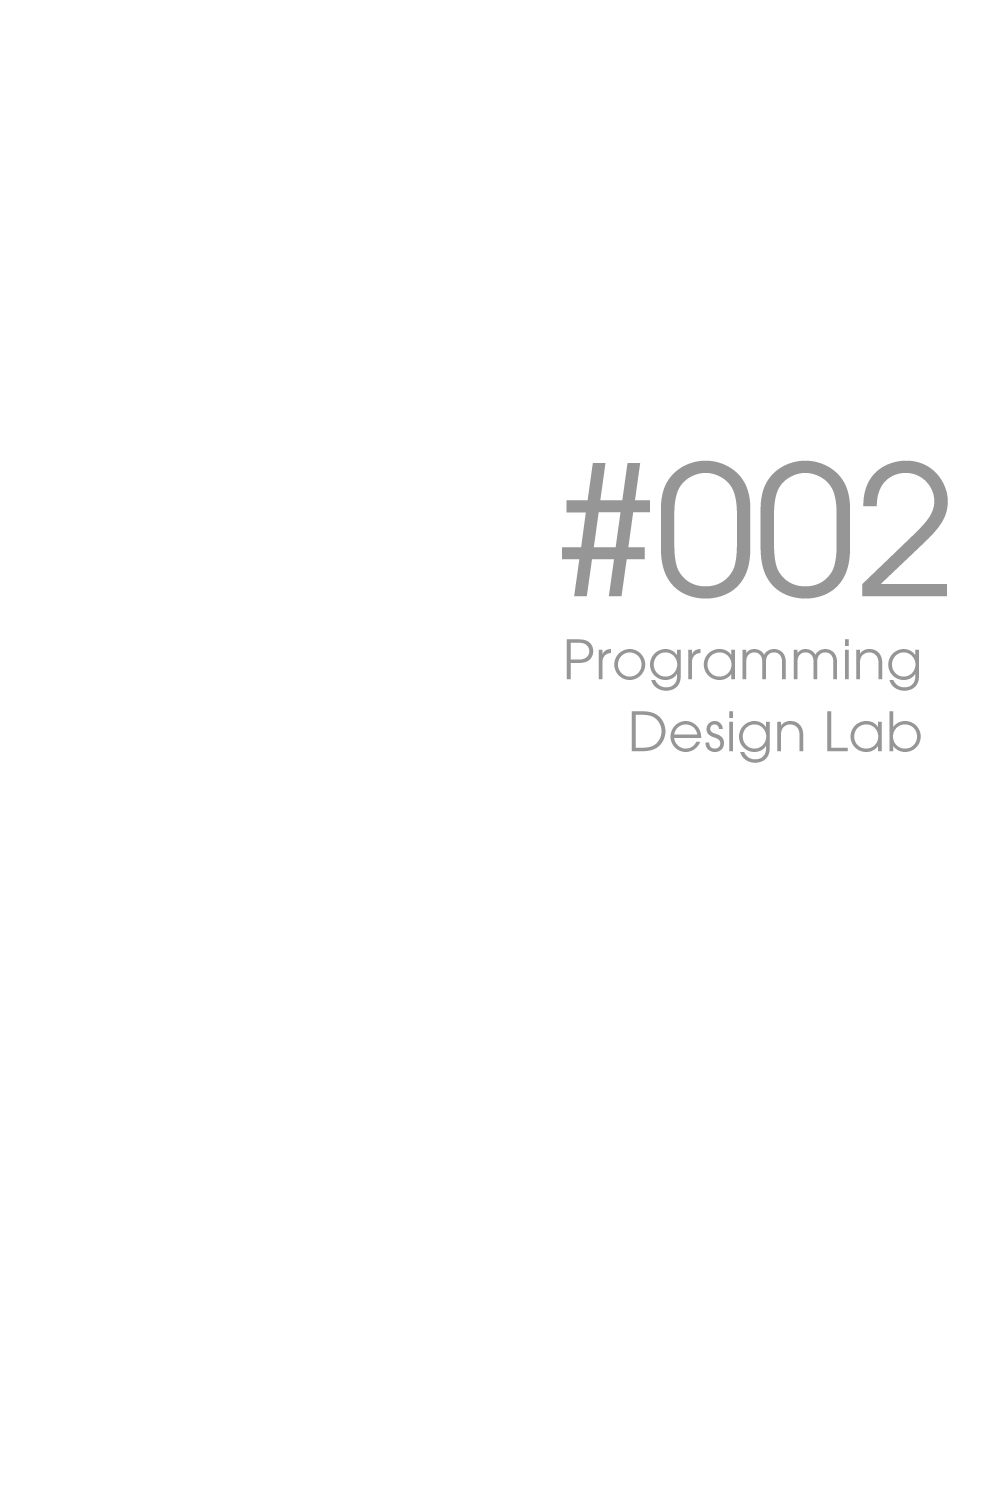 Programming_DesignLab